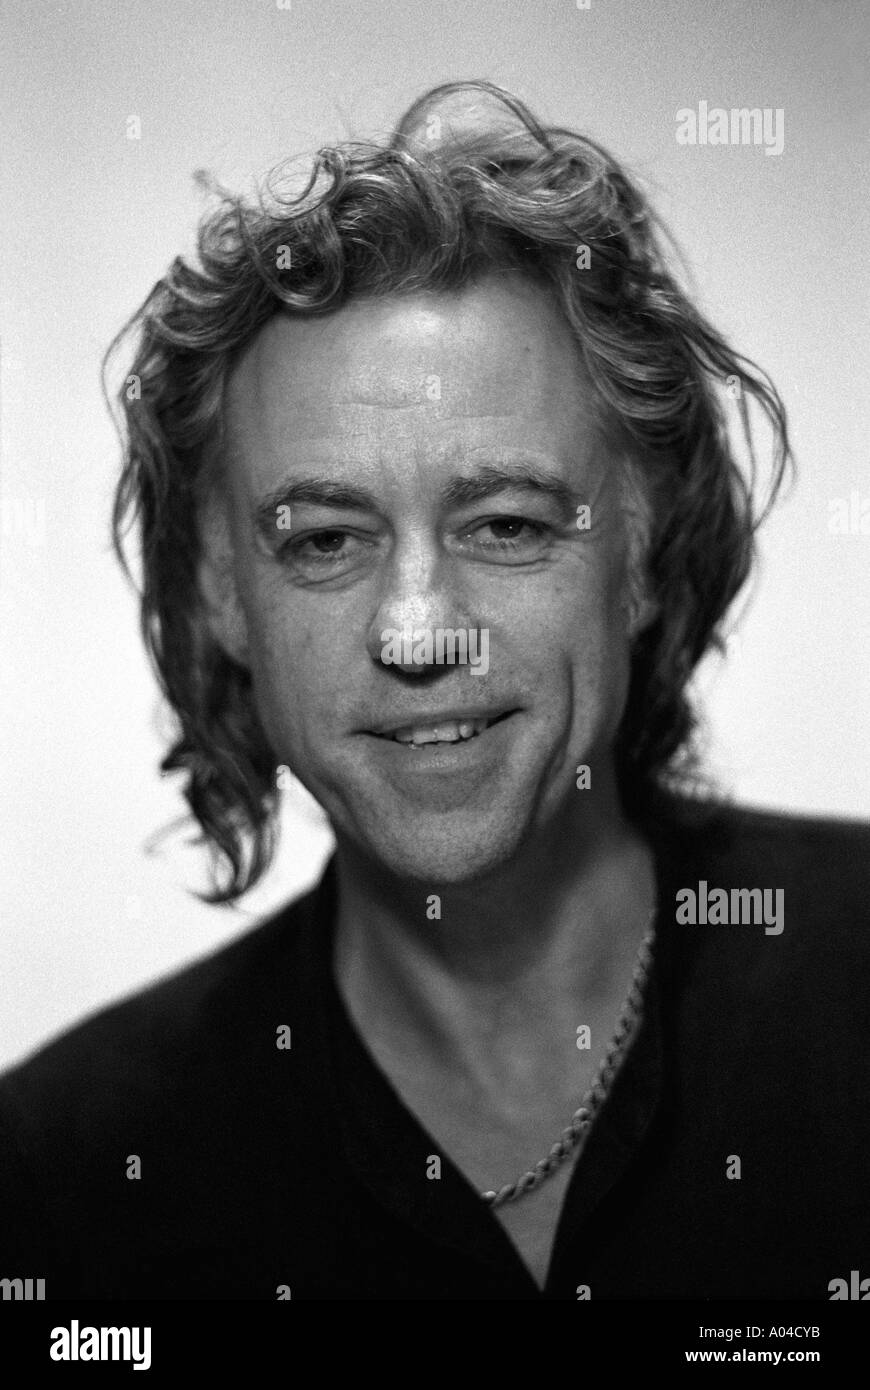 A portrait of Bob Geldof Stock Photo